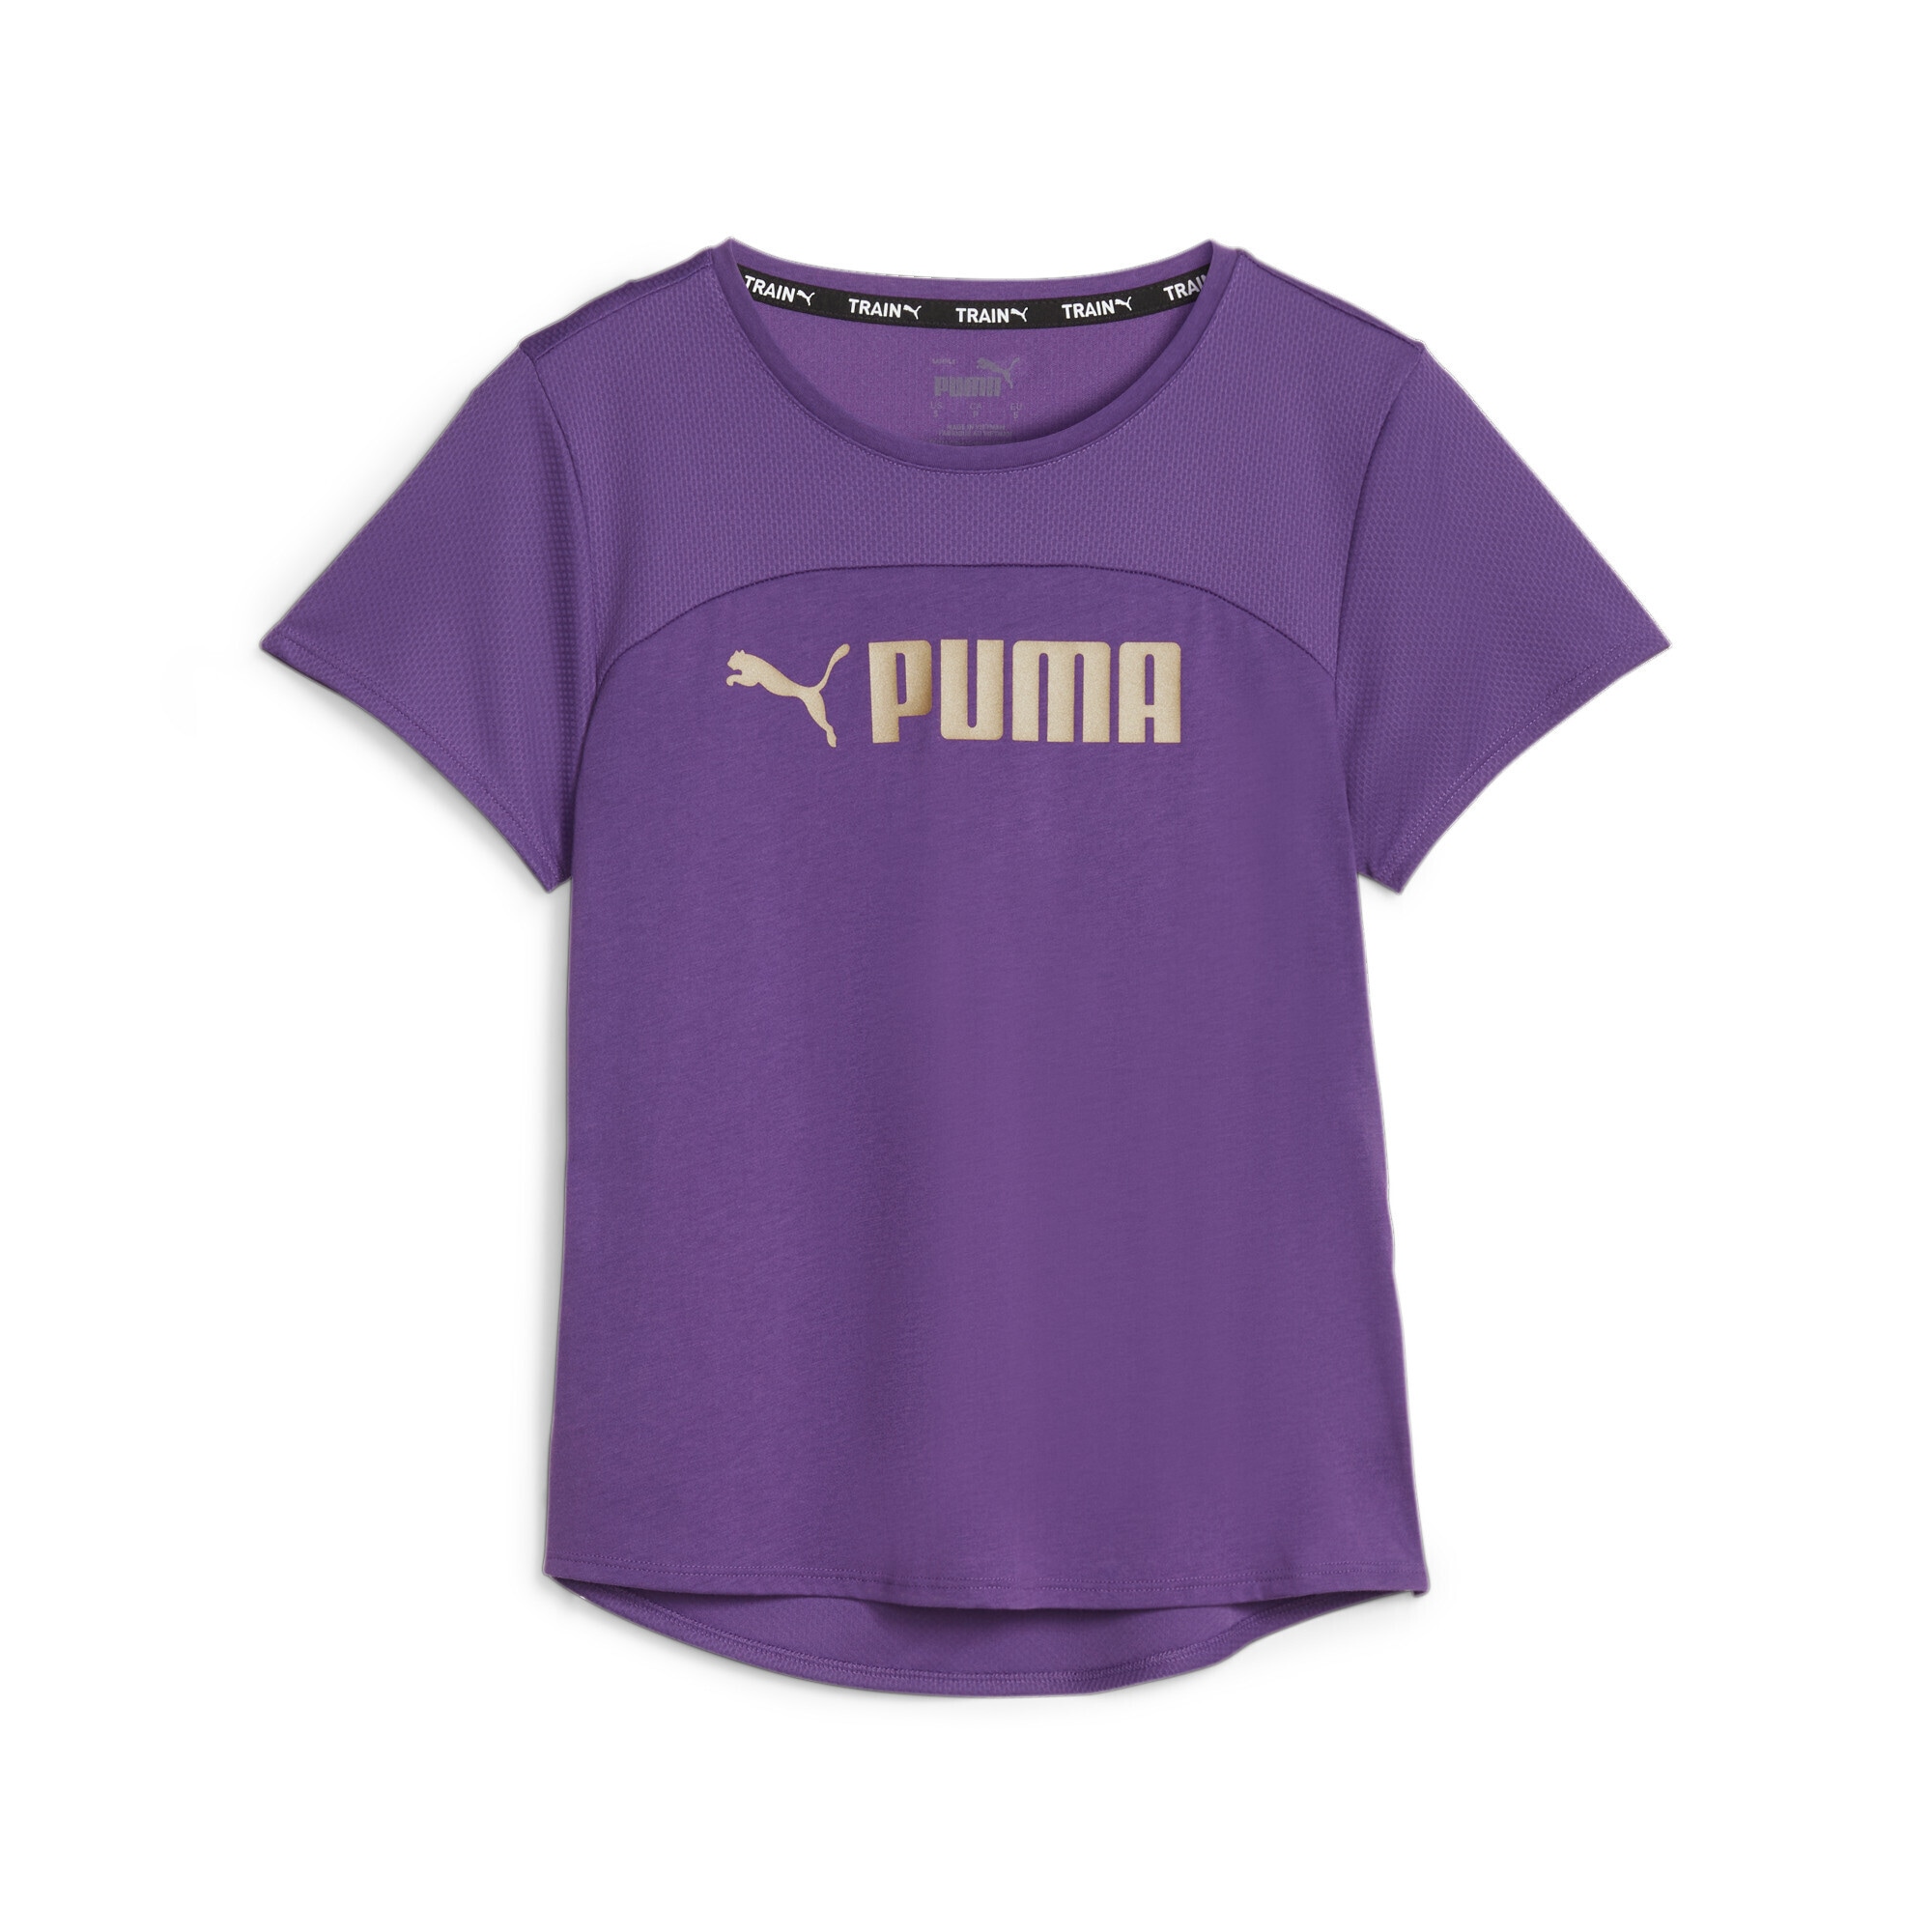 Black Friday PUMA »PUMA | Damen« FIT Trainings-T-Shirt Trainingsshirt BAUR Ultrabreathe